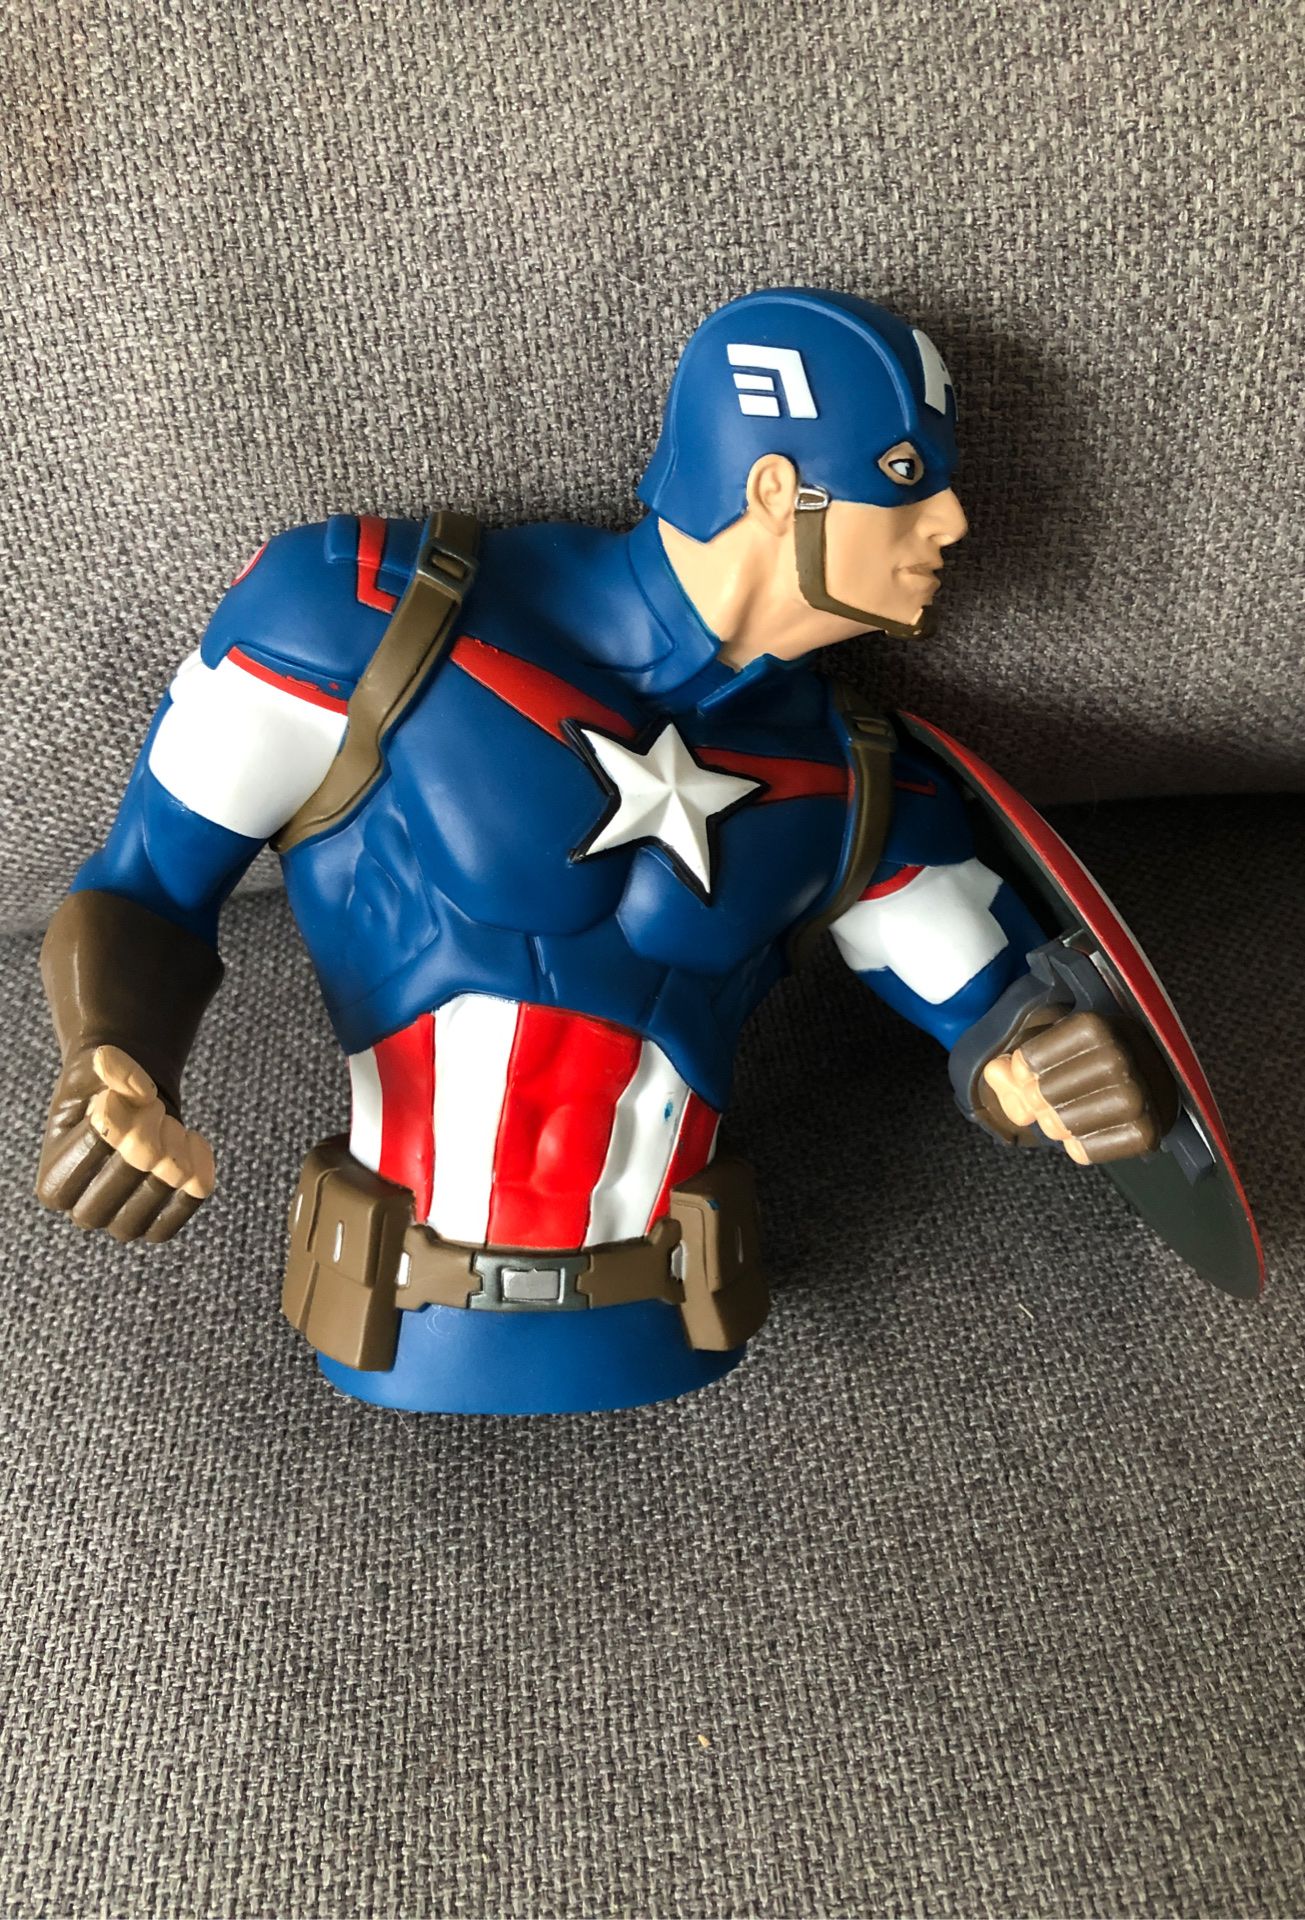 Captain America bust bank.